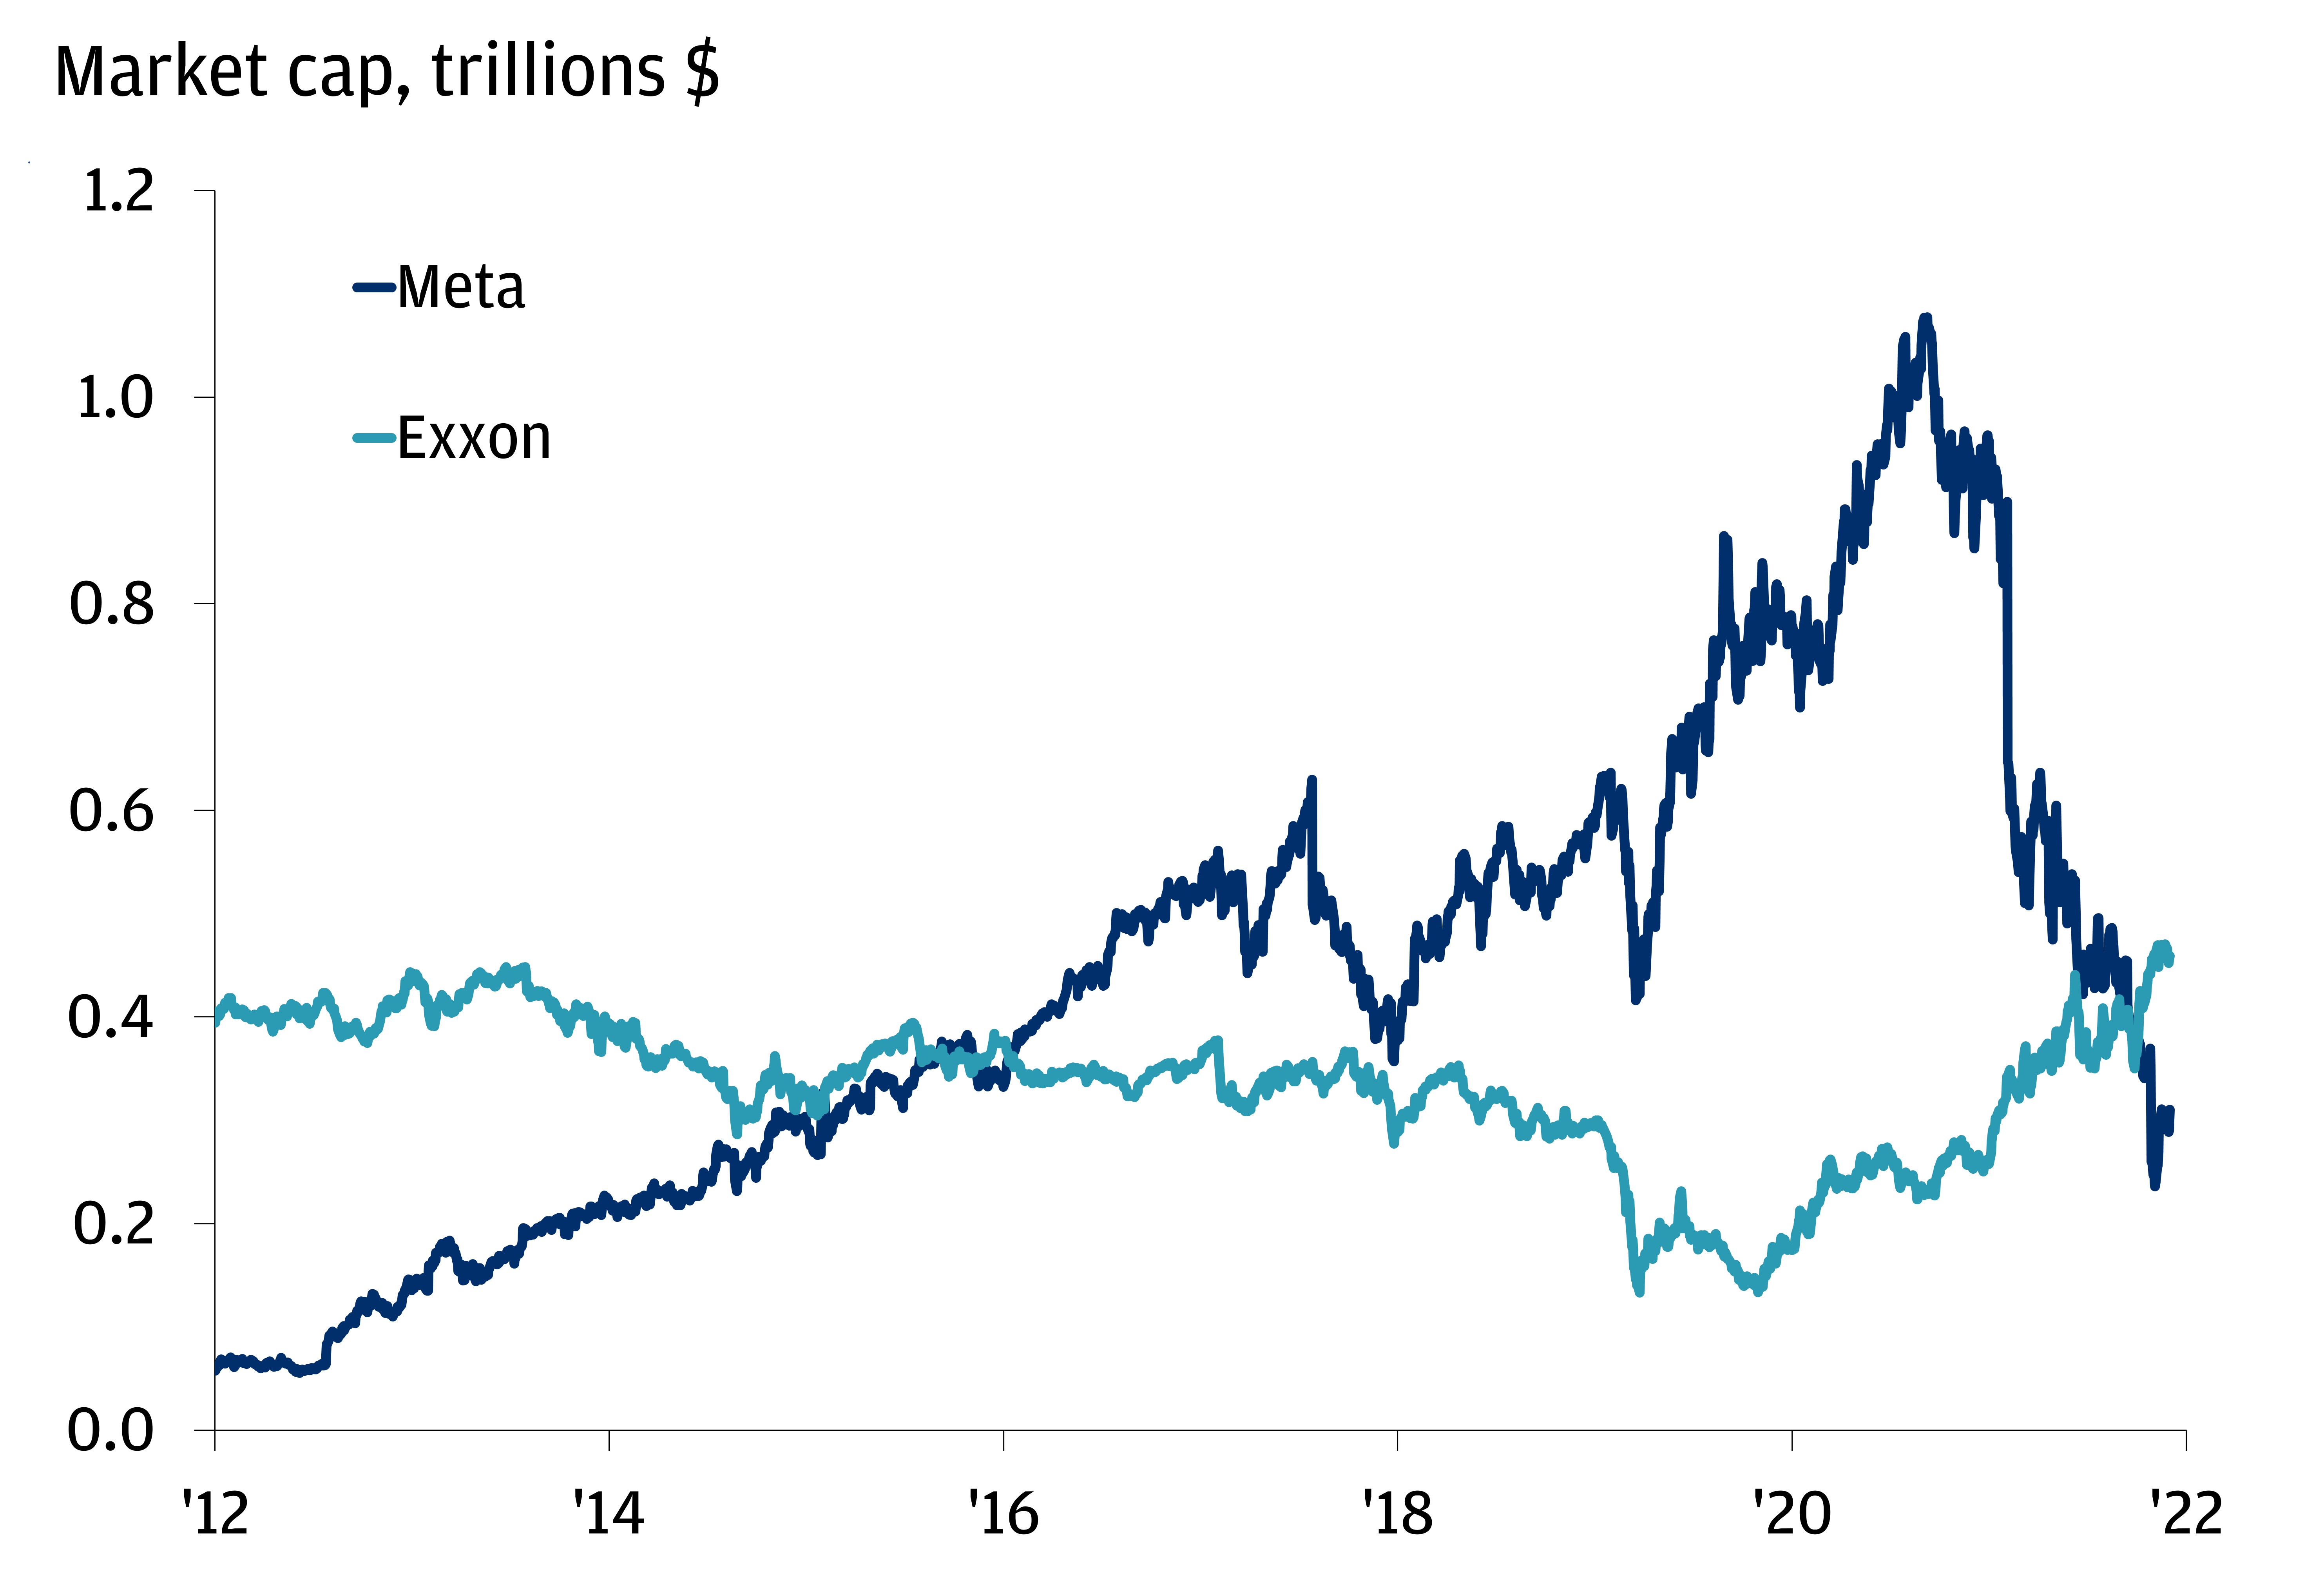 This chart shows the market cap of Meta versus the market cap of Exxon since 2012.